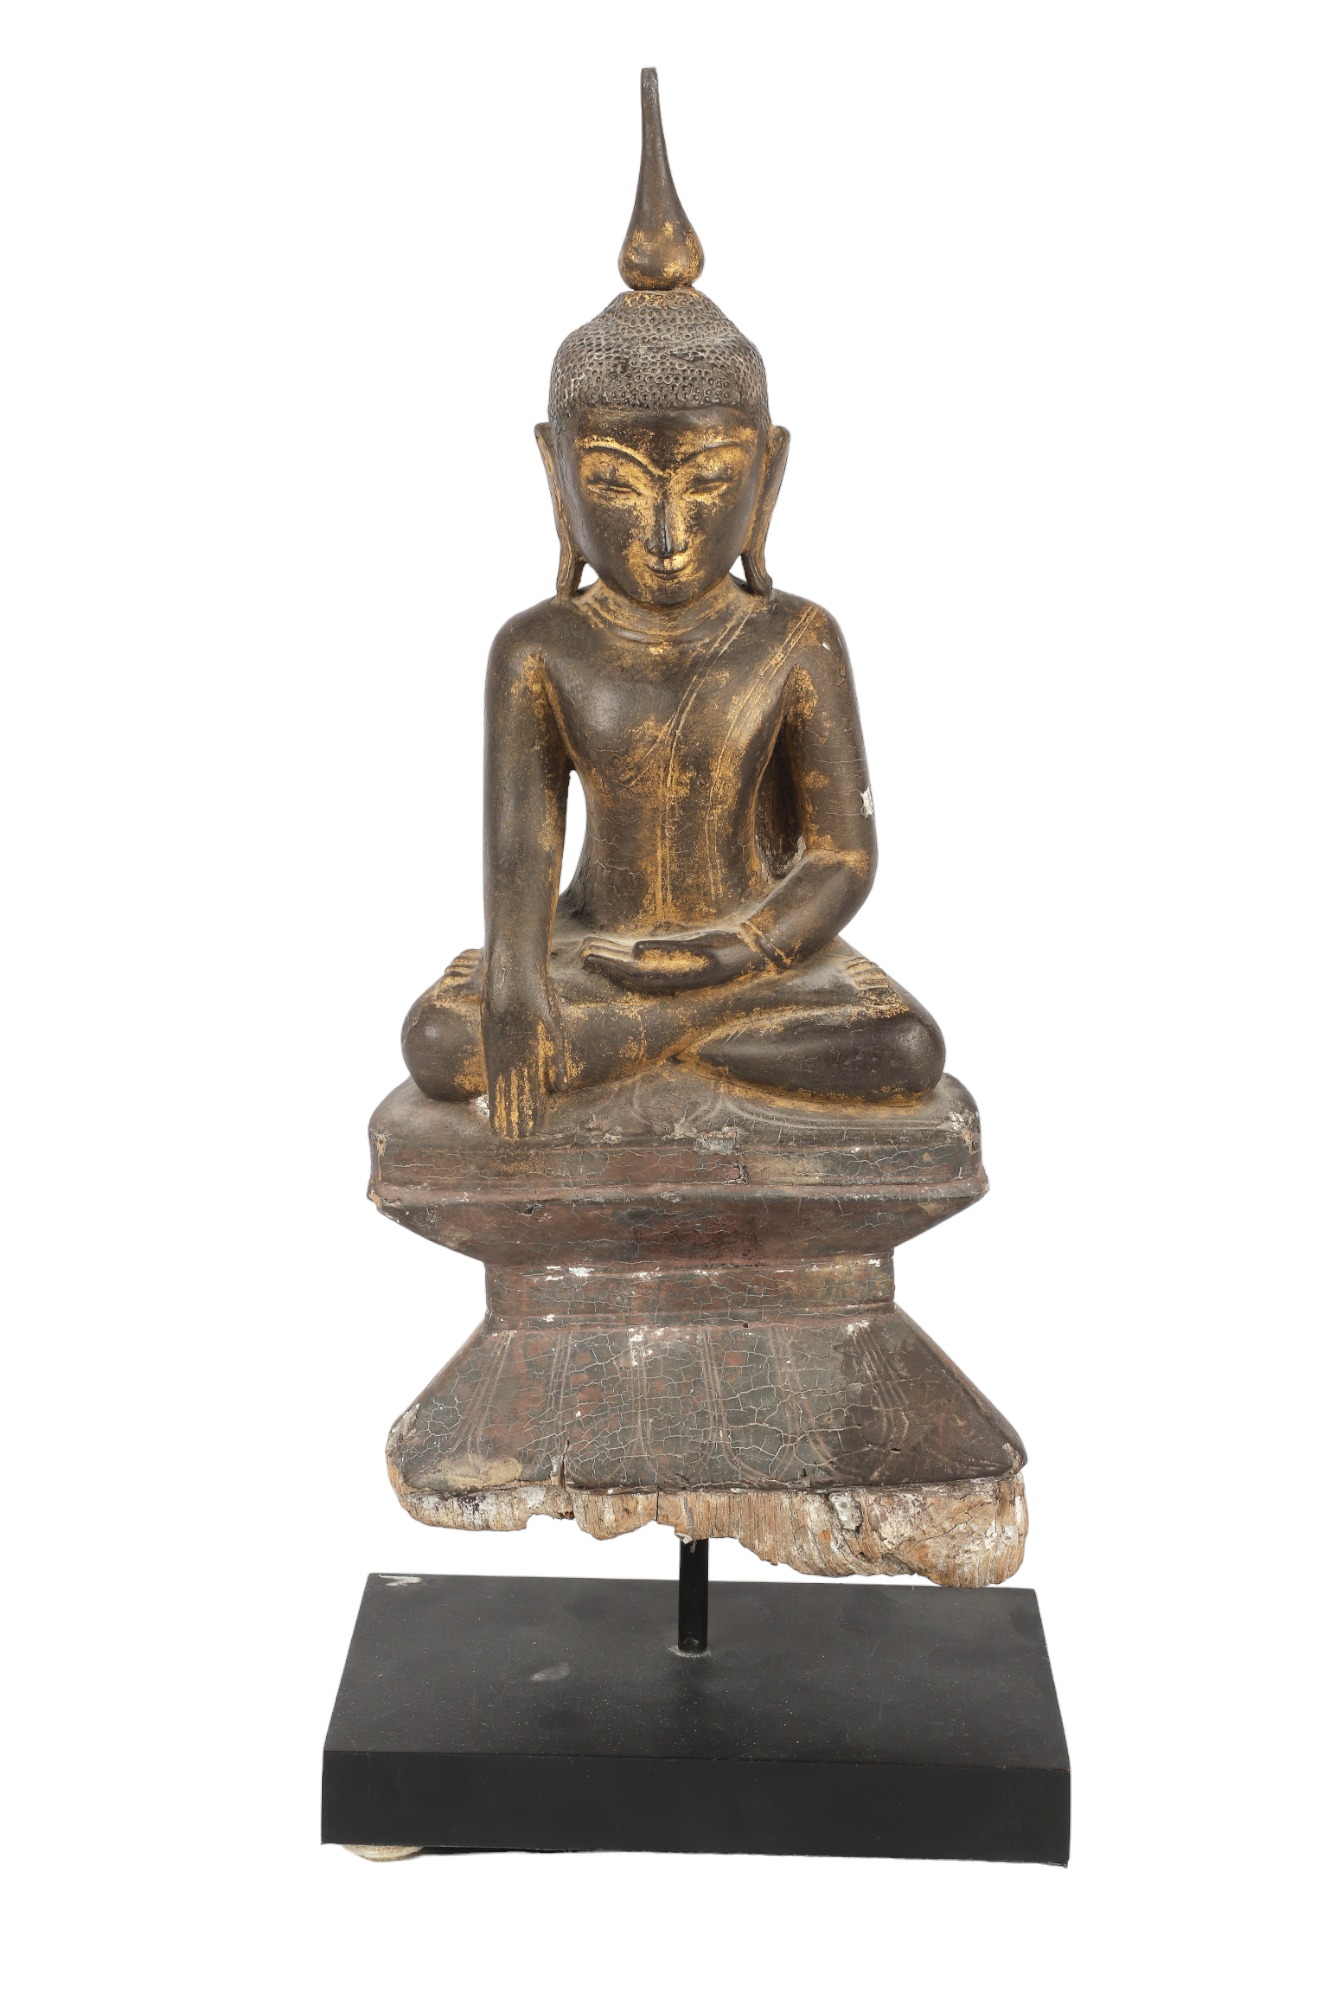 Carved wood Thai Buddha figure 3ca53f